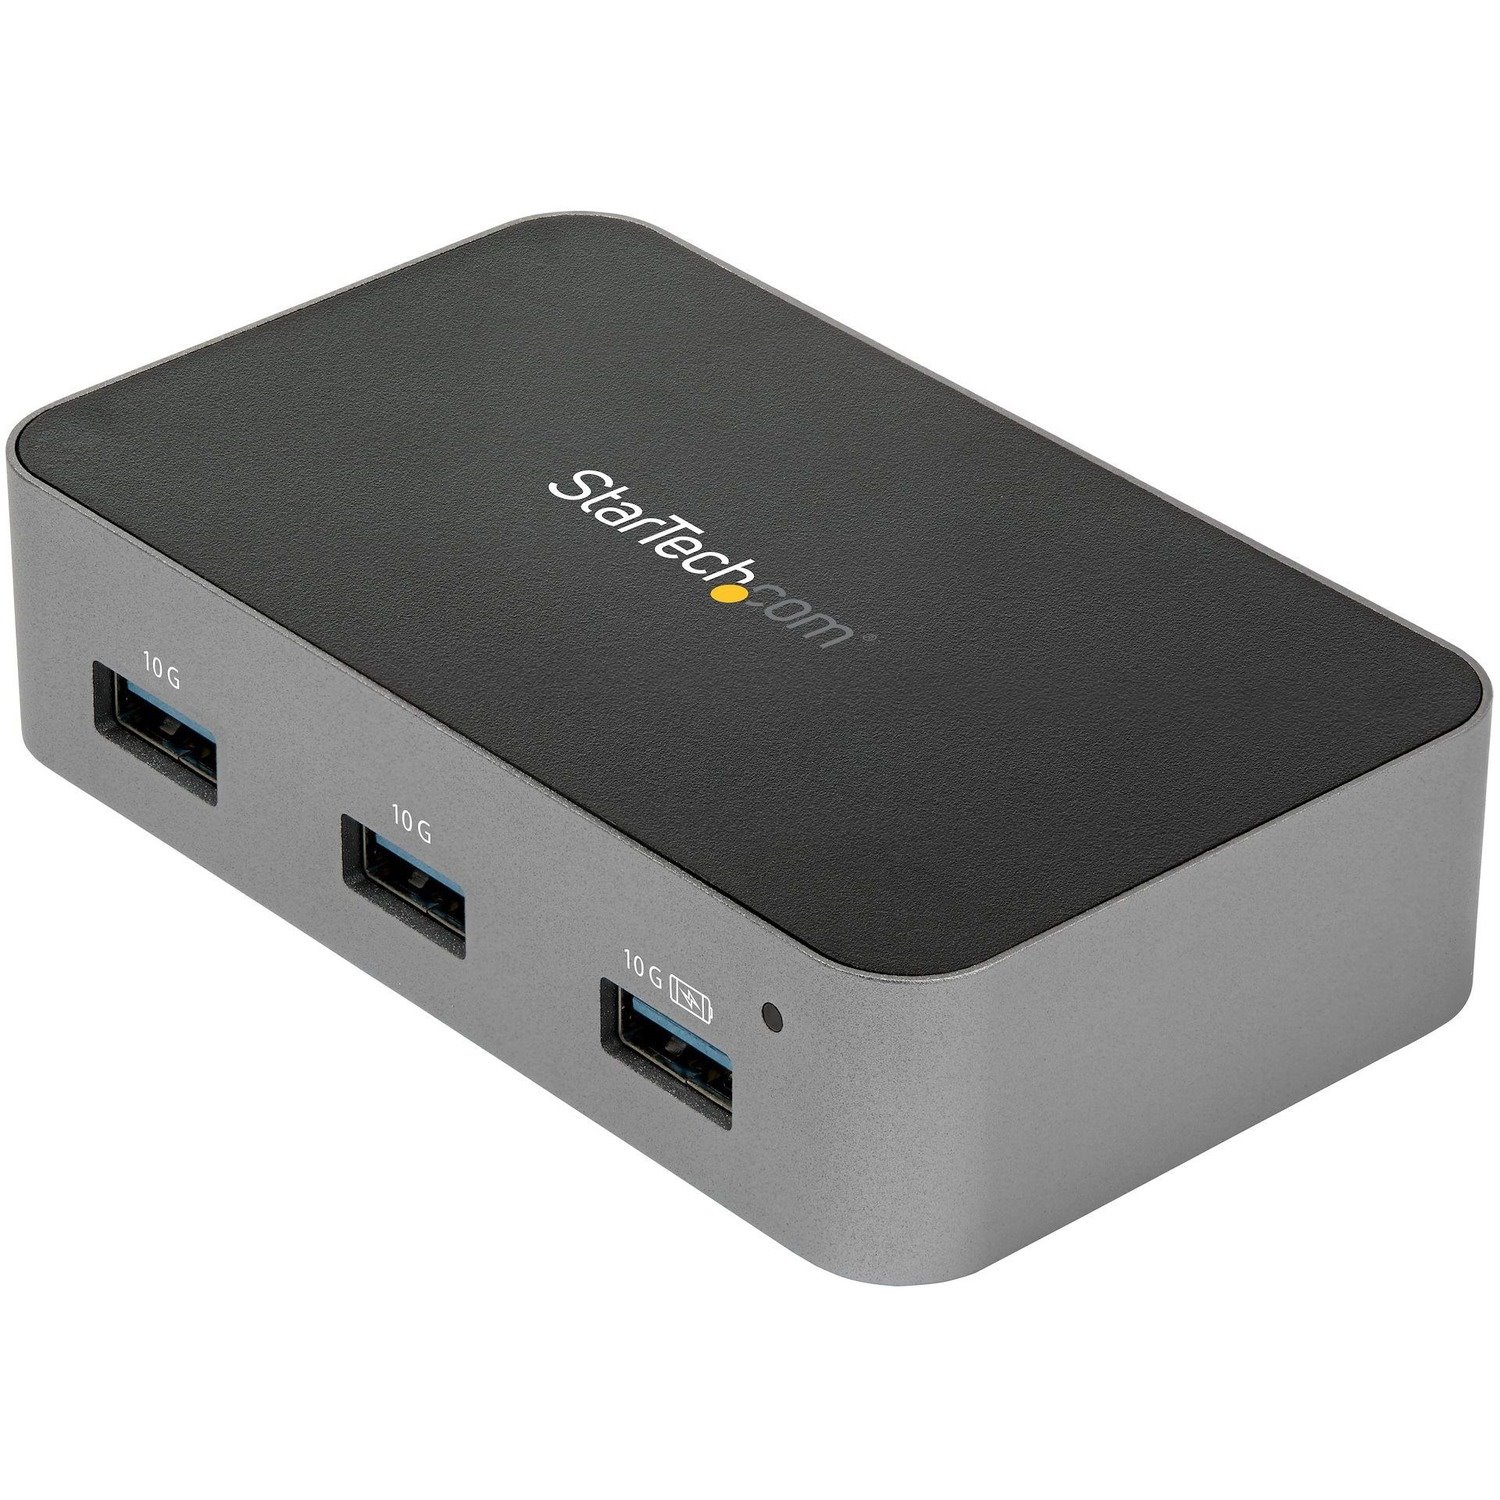 StarTech.com USB Hub - USB 3.1 Type C - External - Black, Space Gray